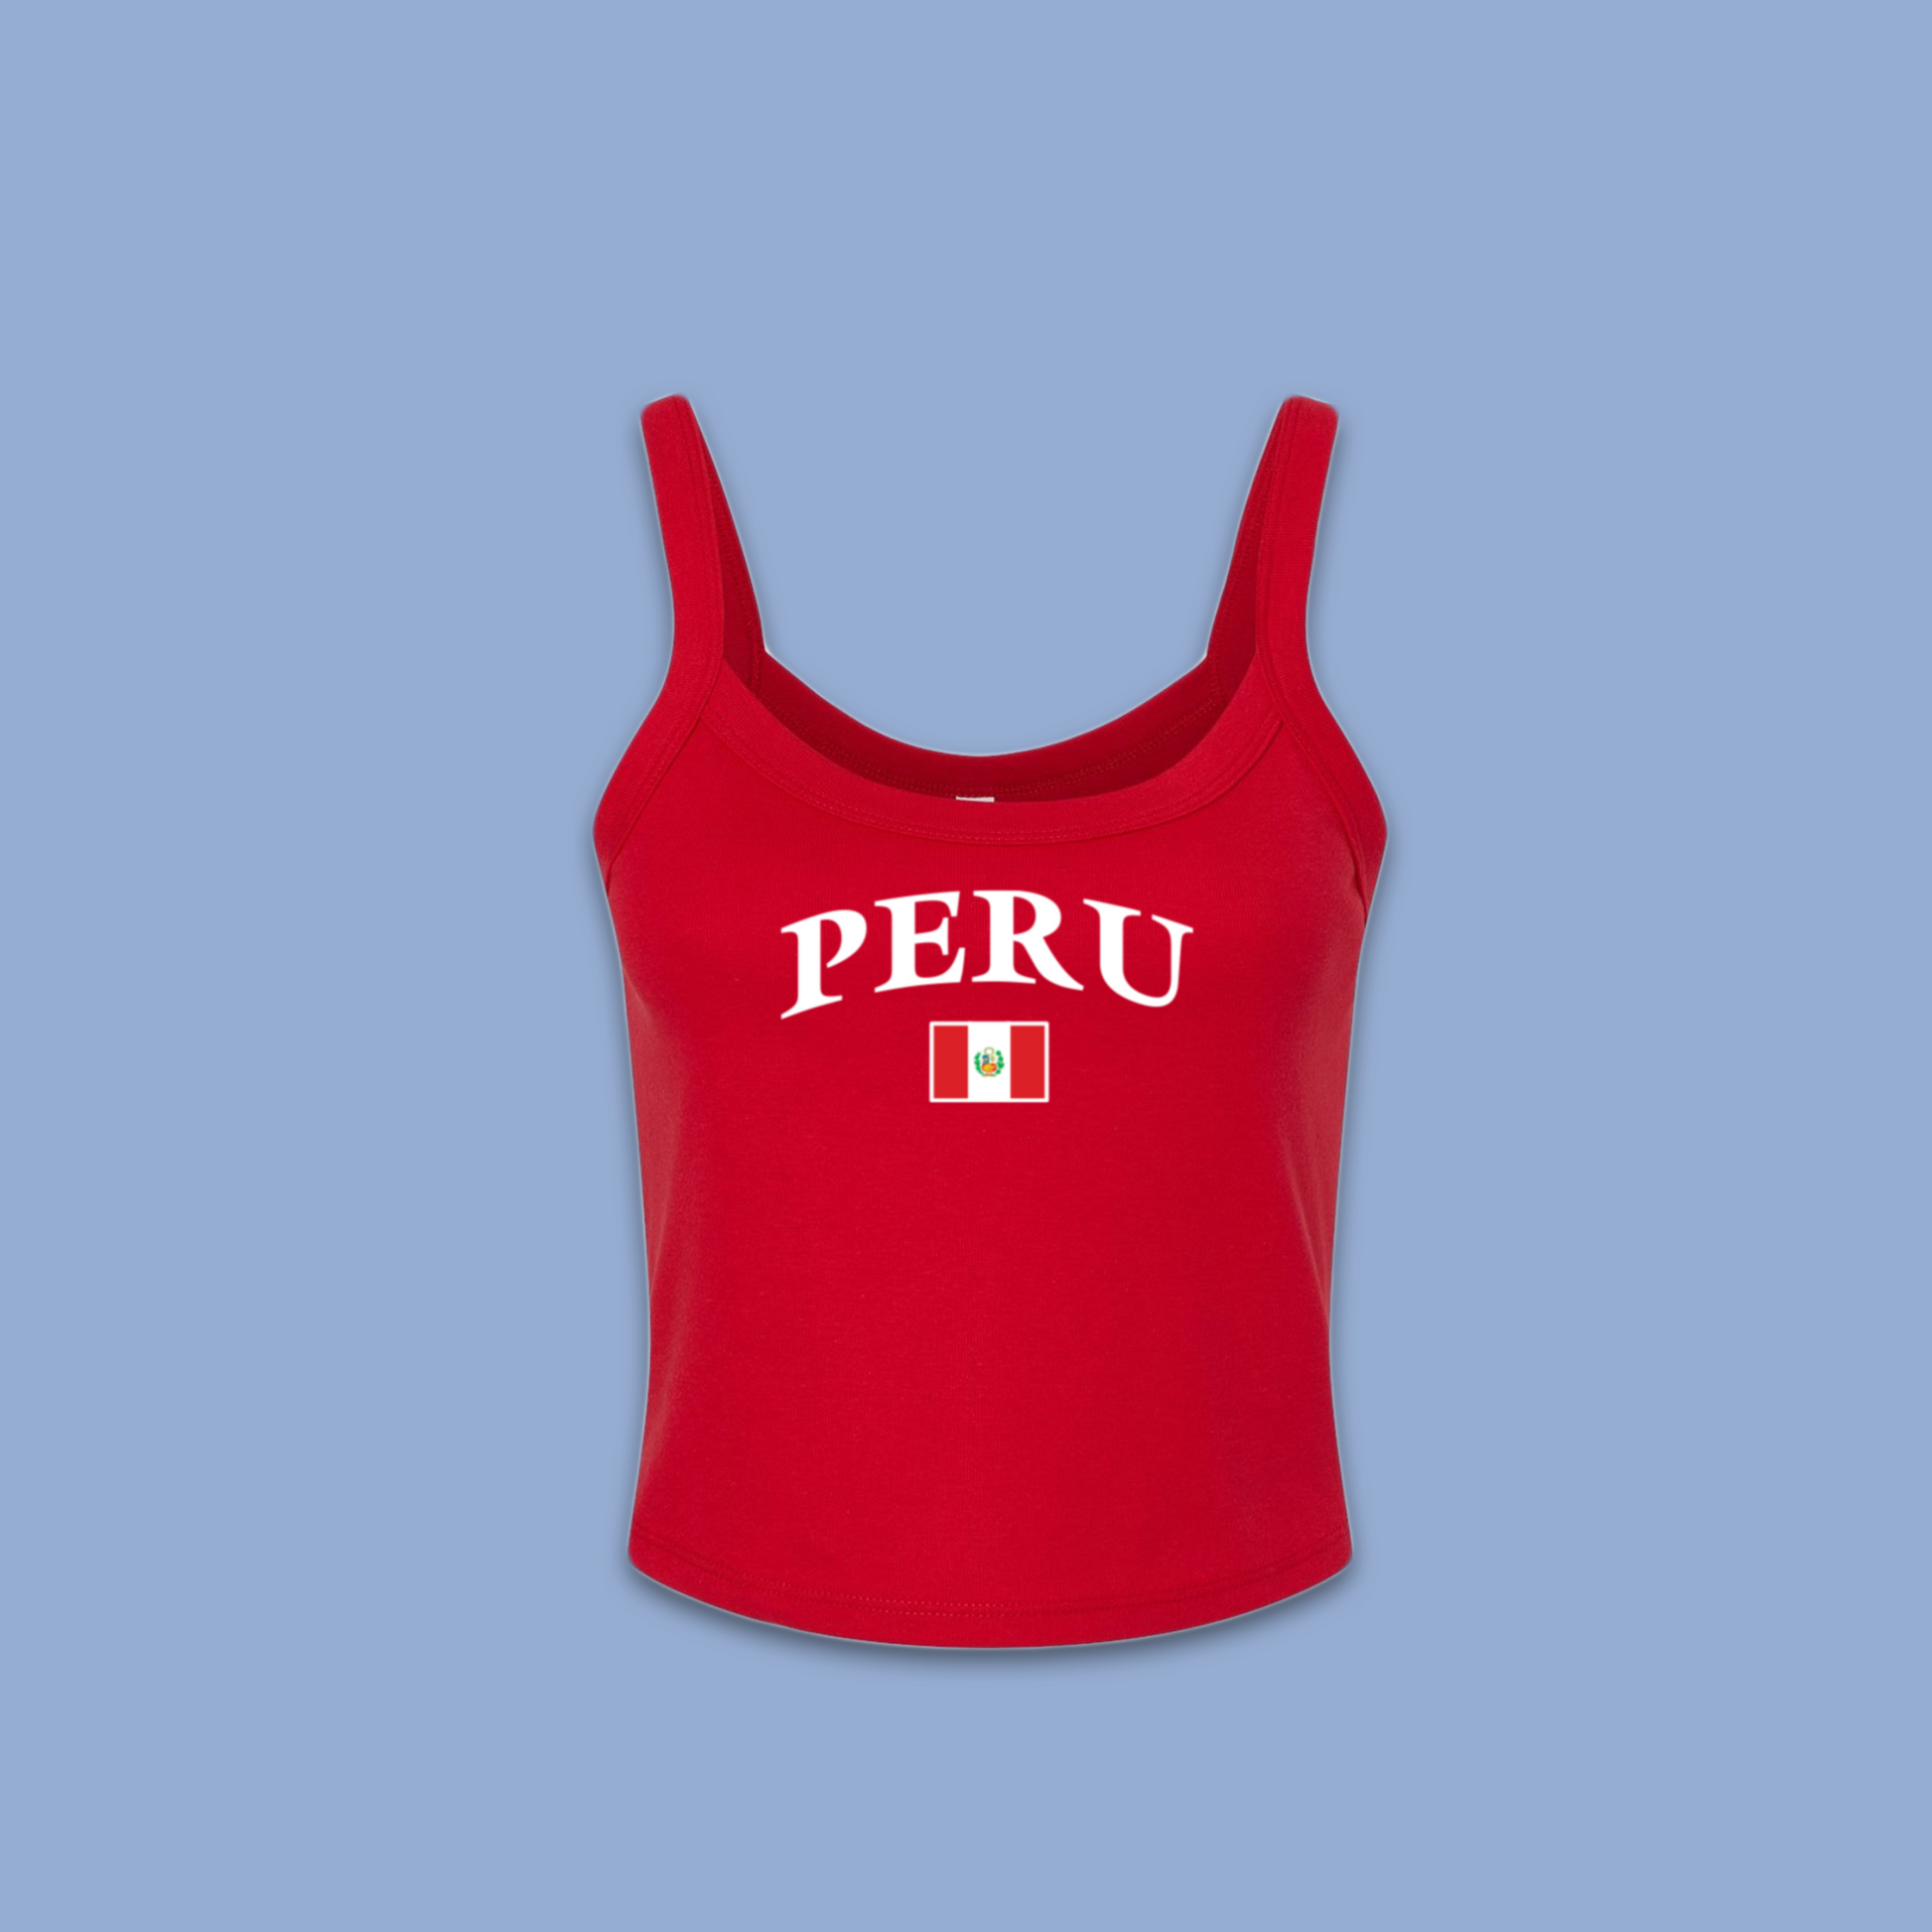 Peru Rectangle Tank Top for Women - XL / Red  Tank tops, Athletic tank tops,  Peru tank top